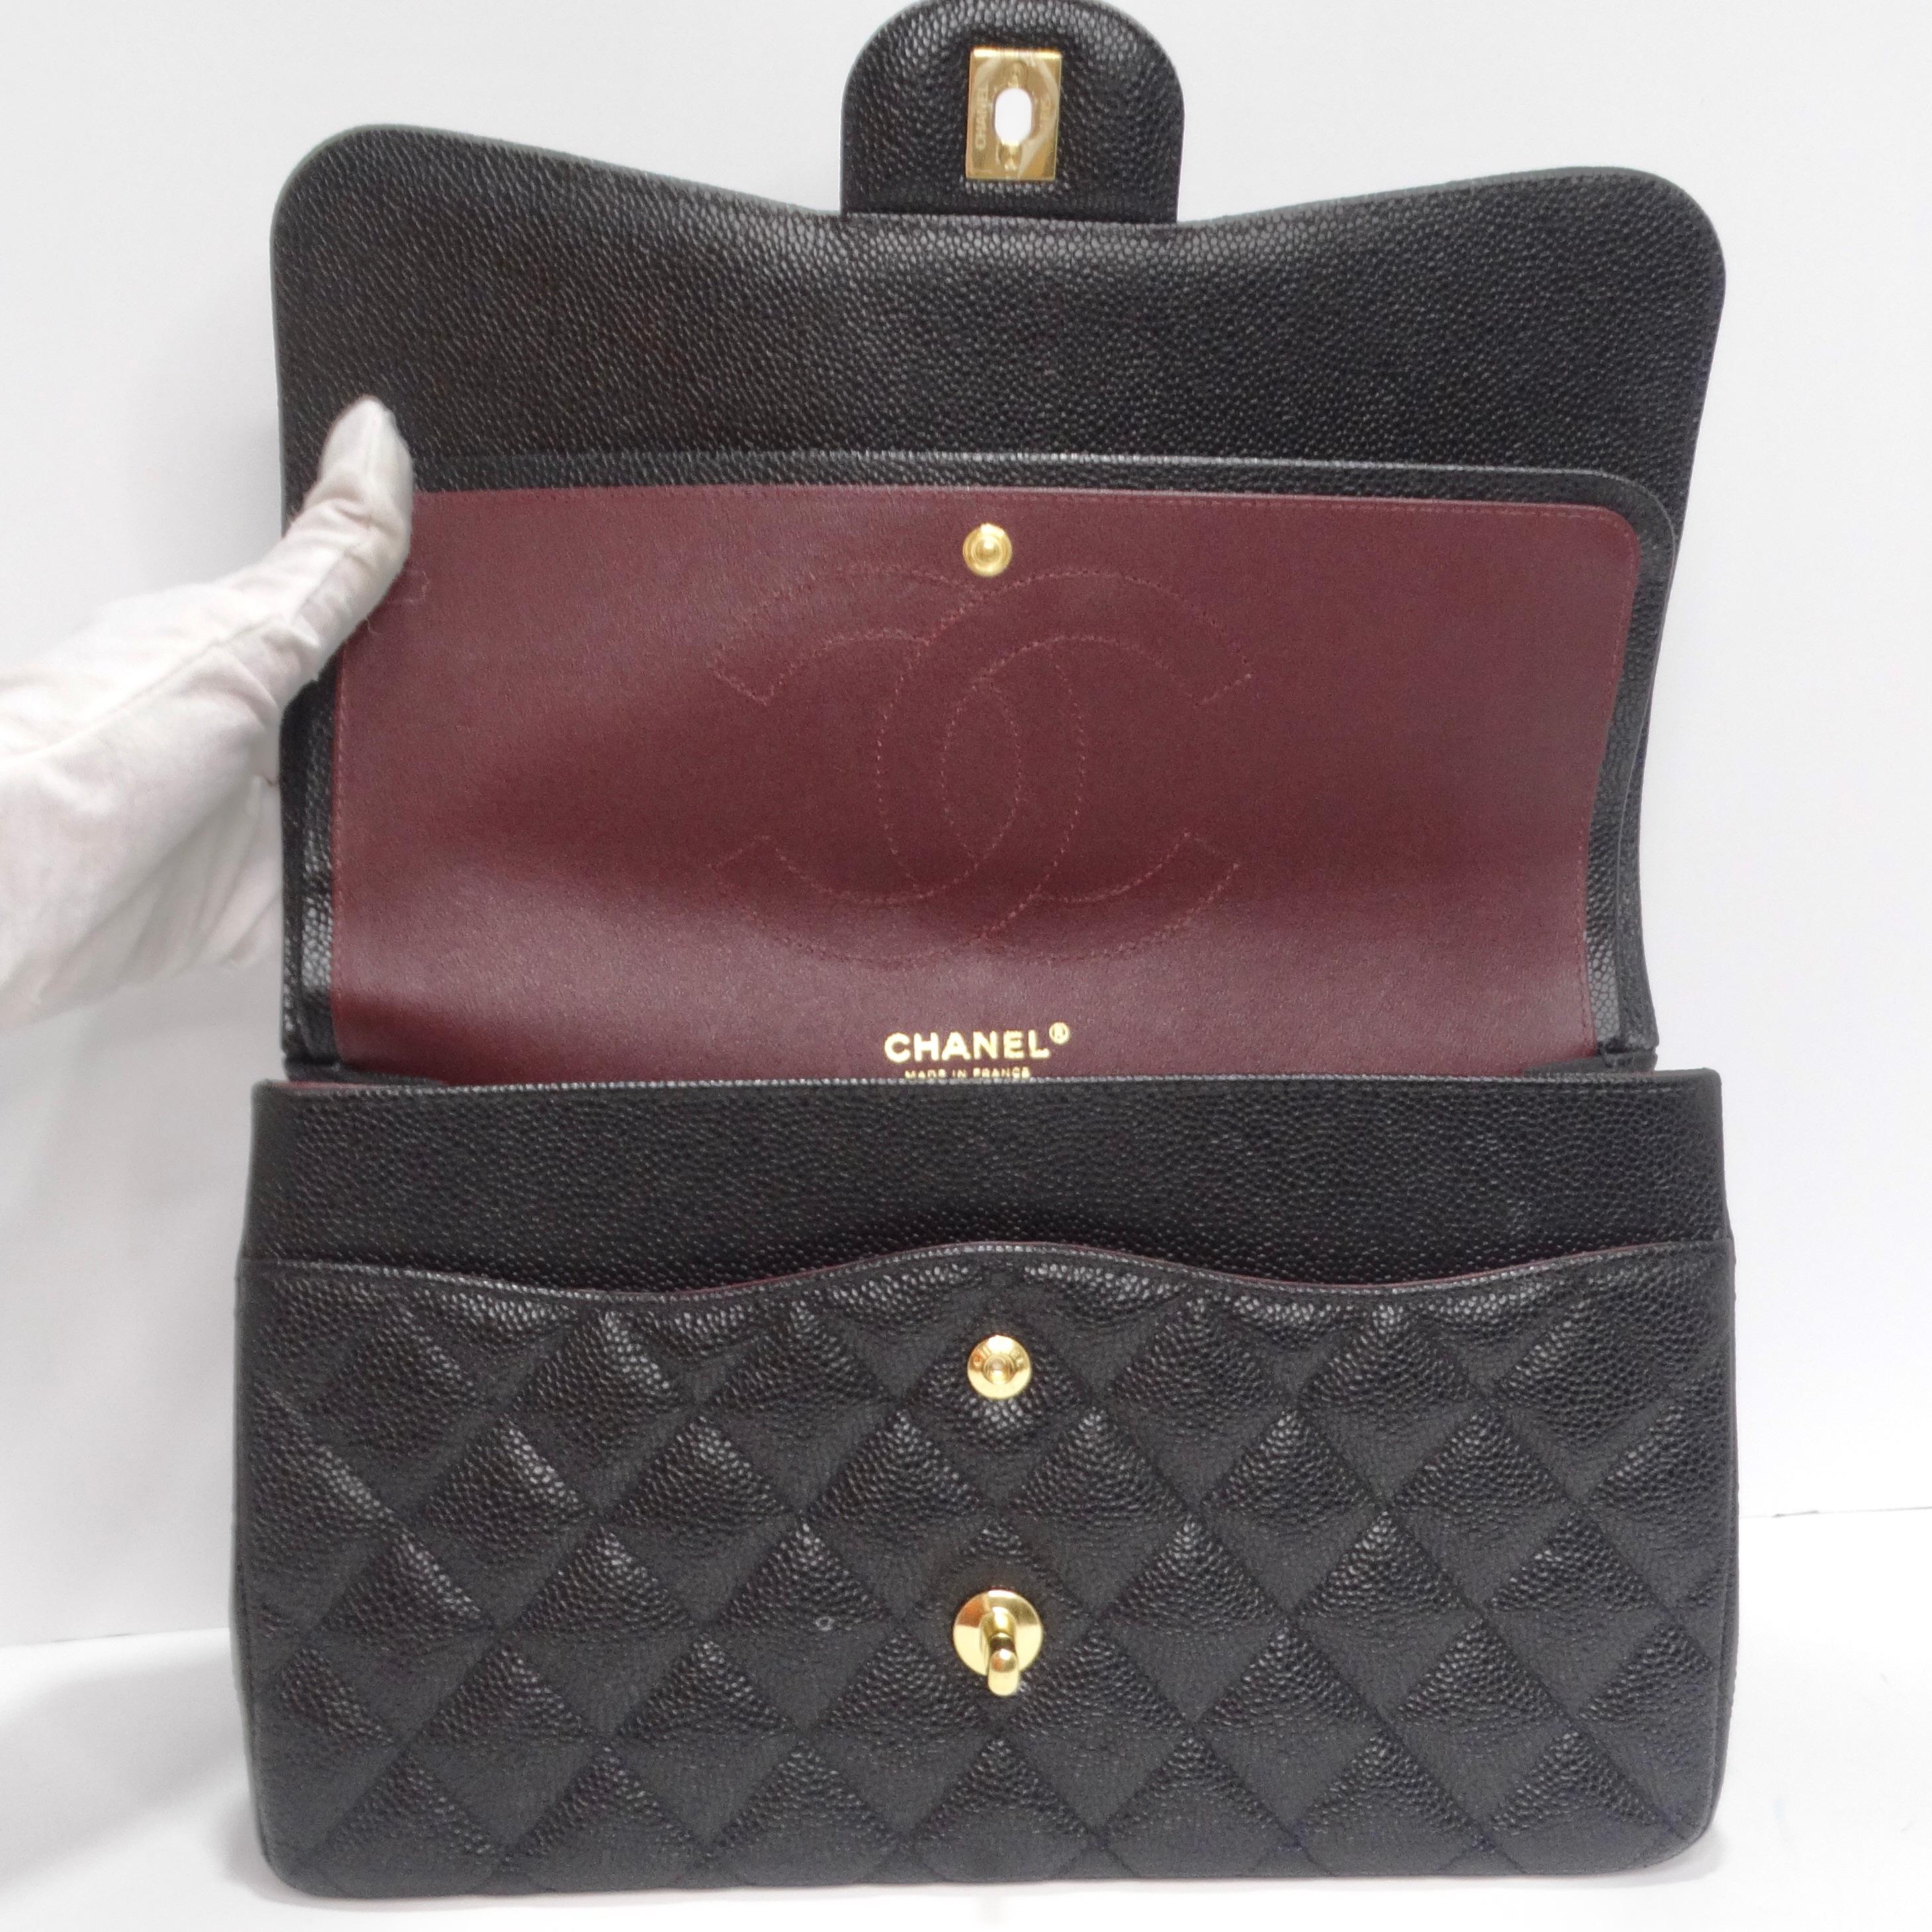 Chanel Large Classic Quilted Caviar Handbag Black/Burgundy 10